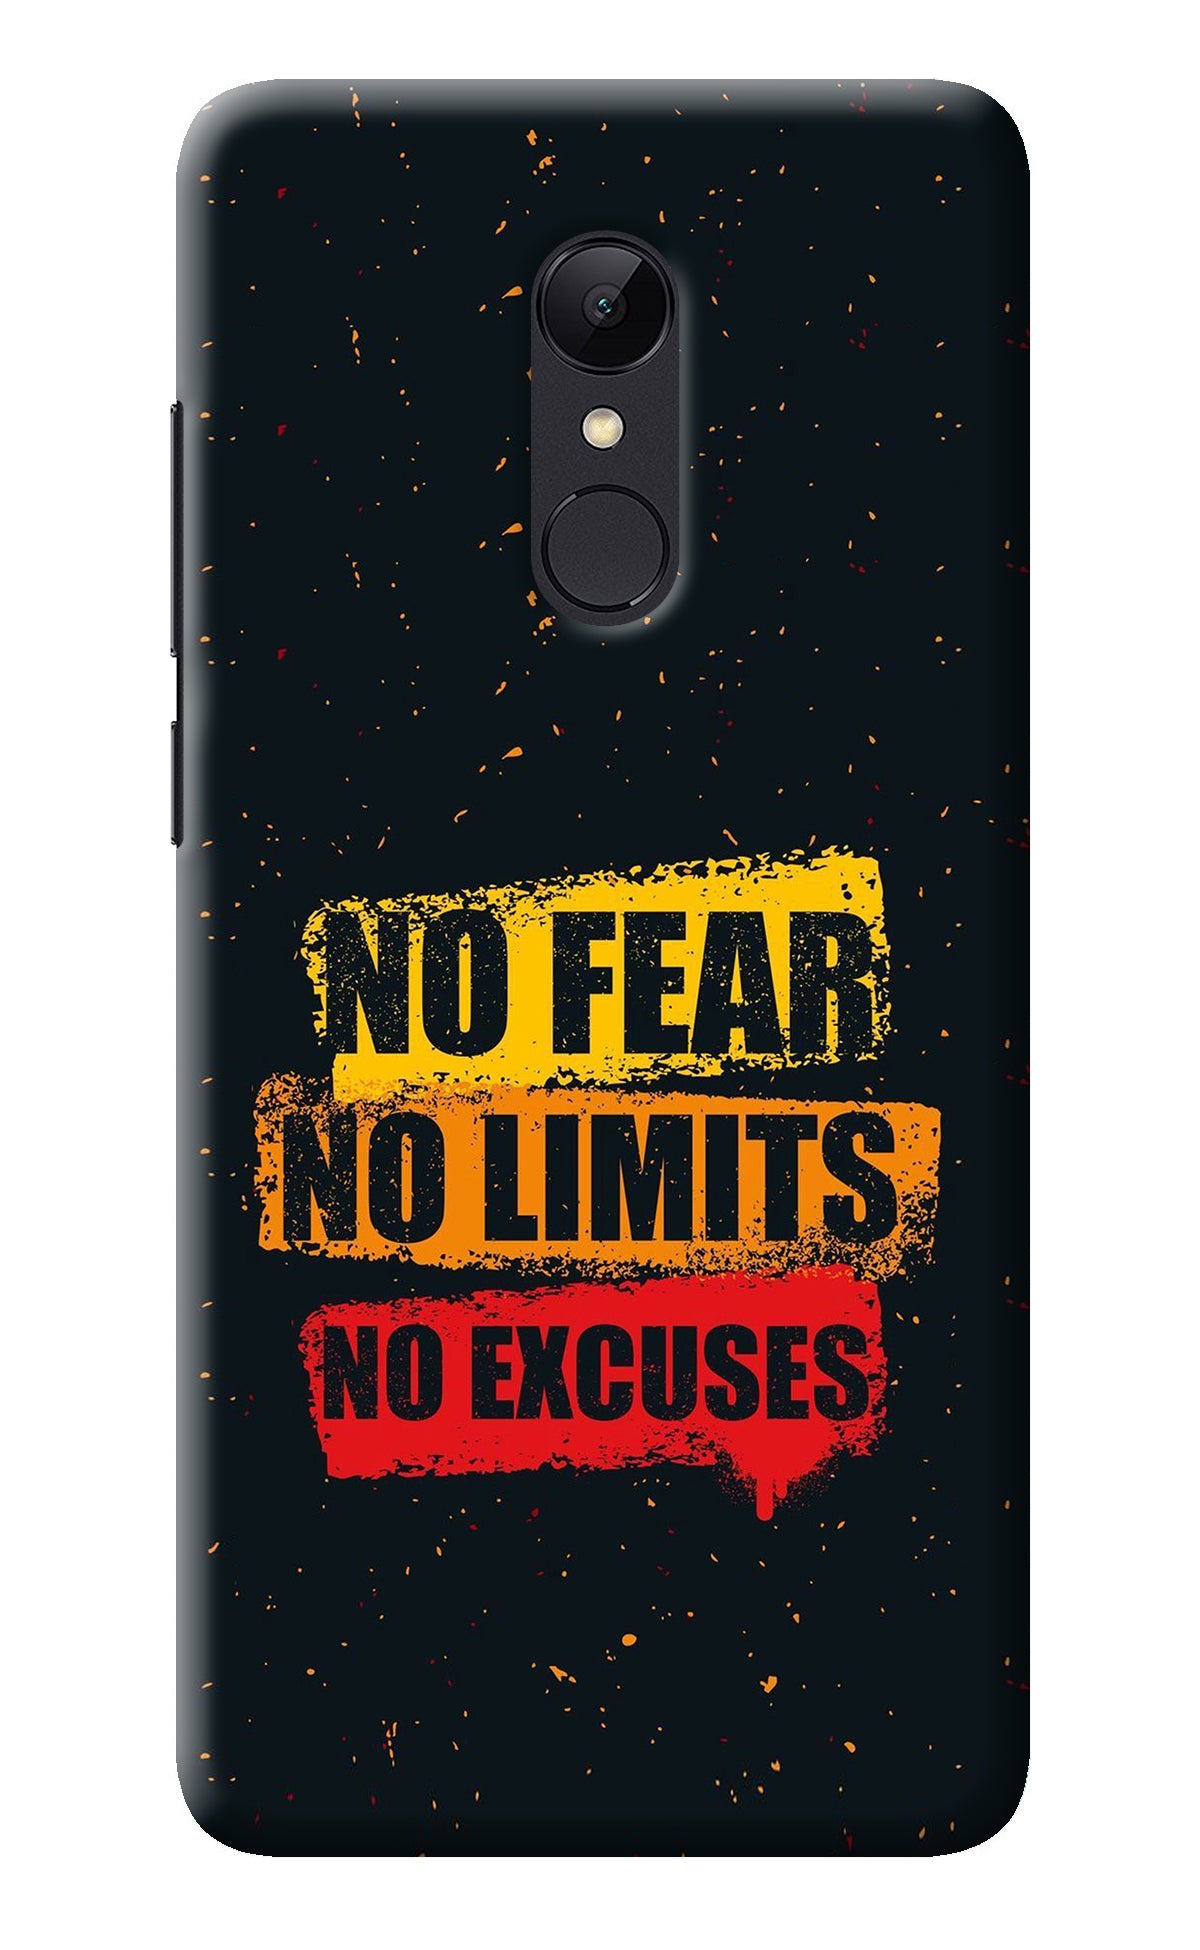 No Fear No Limits No Excuse Redmi Note 4 Back Cover